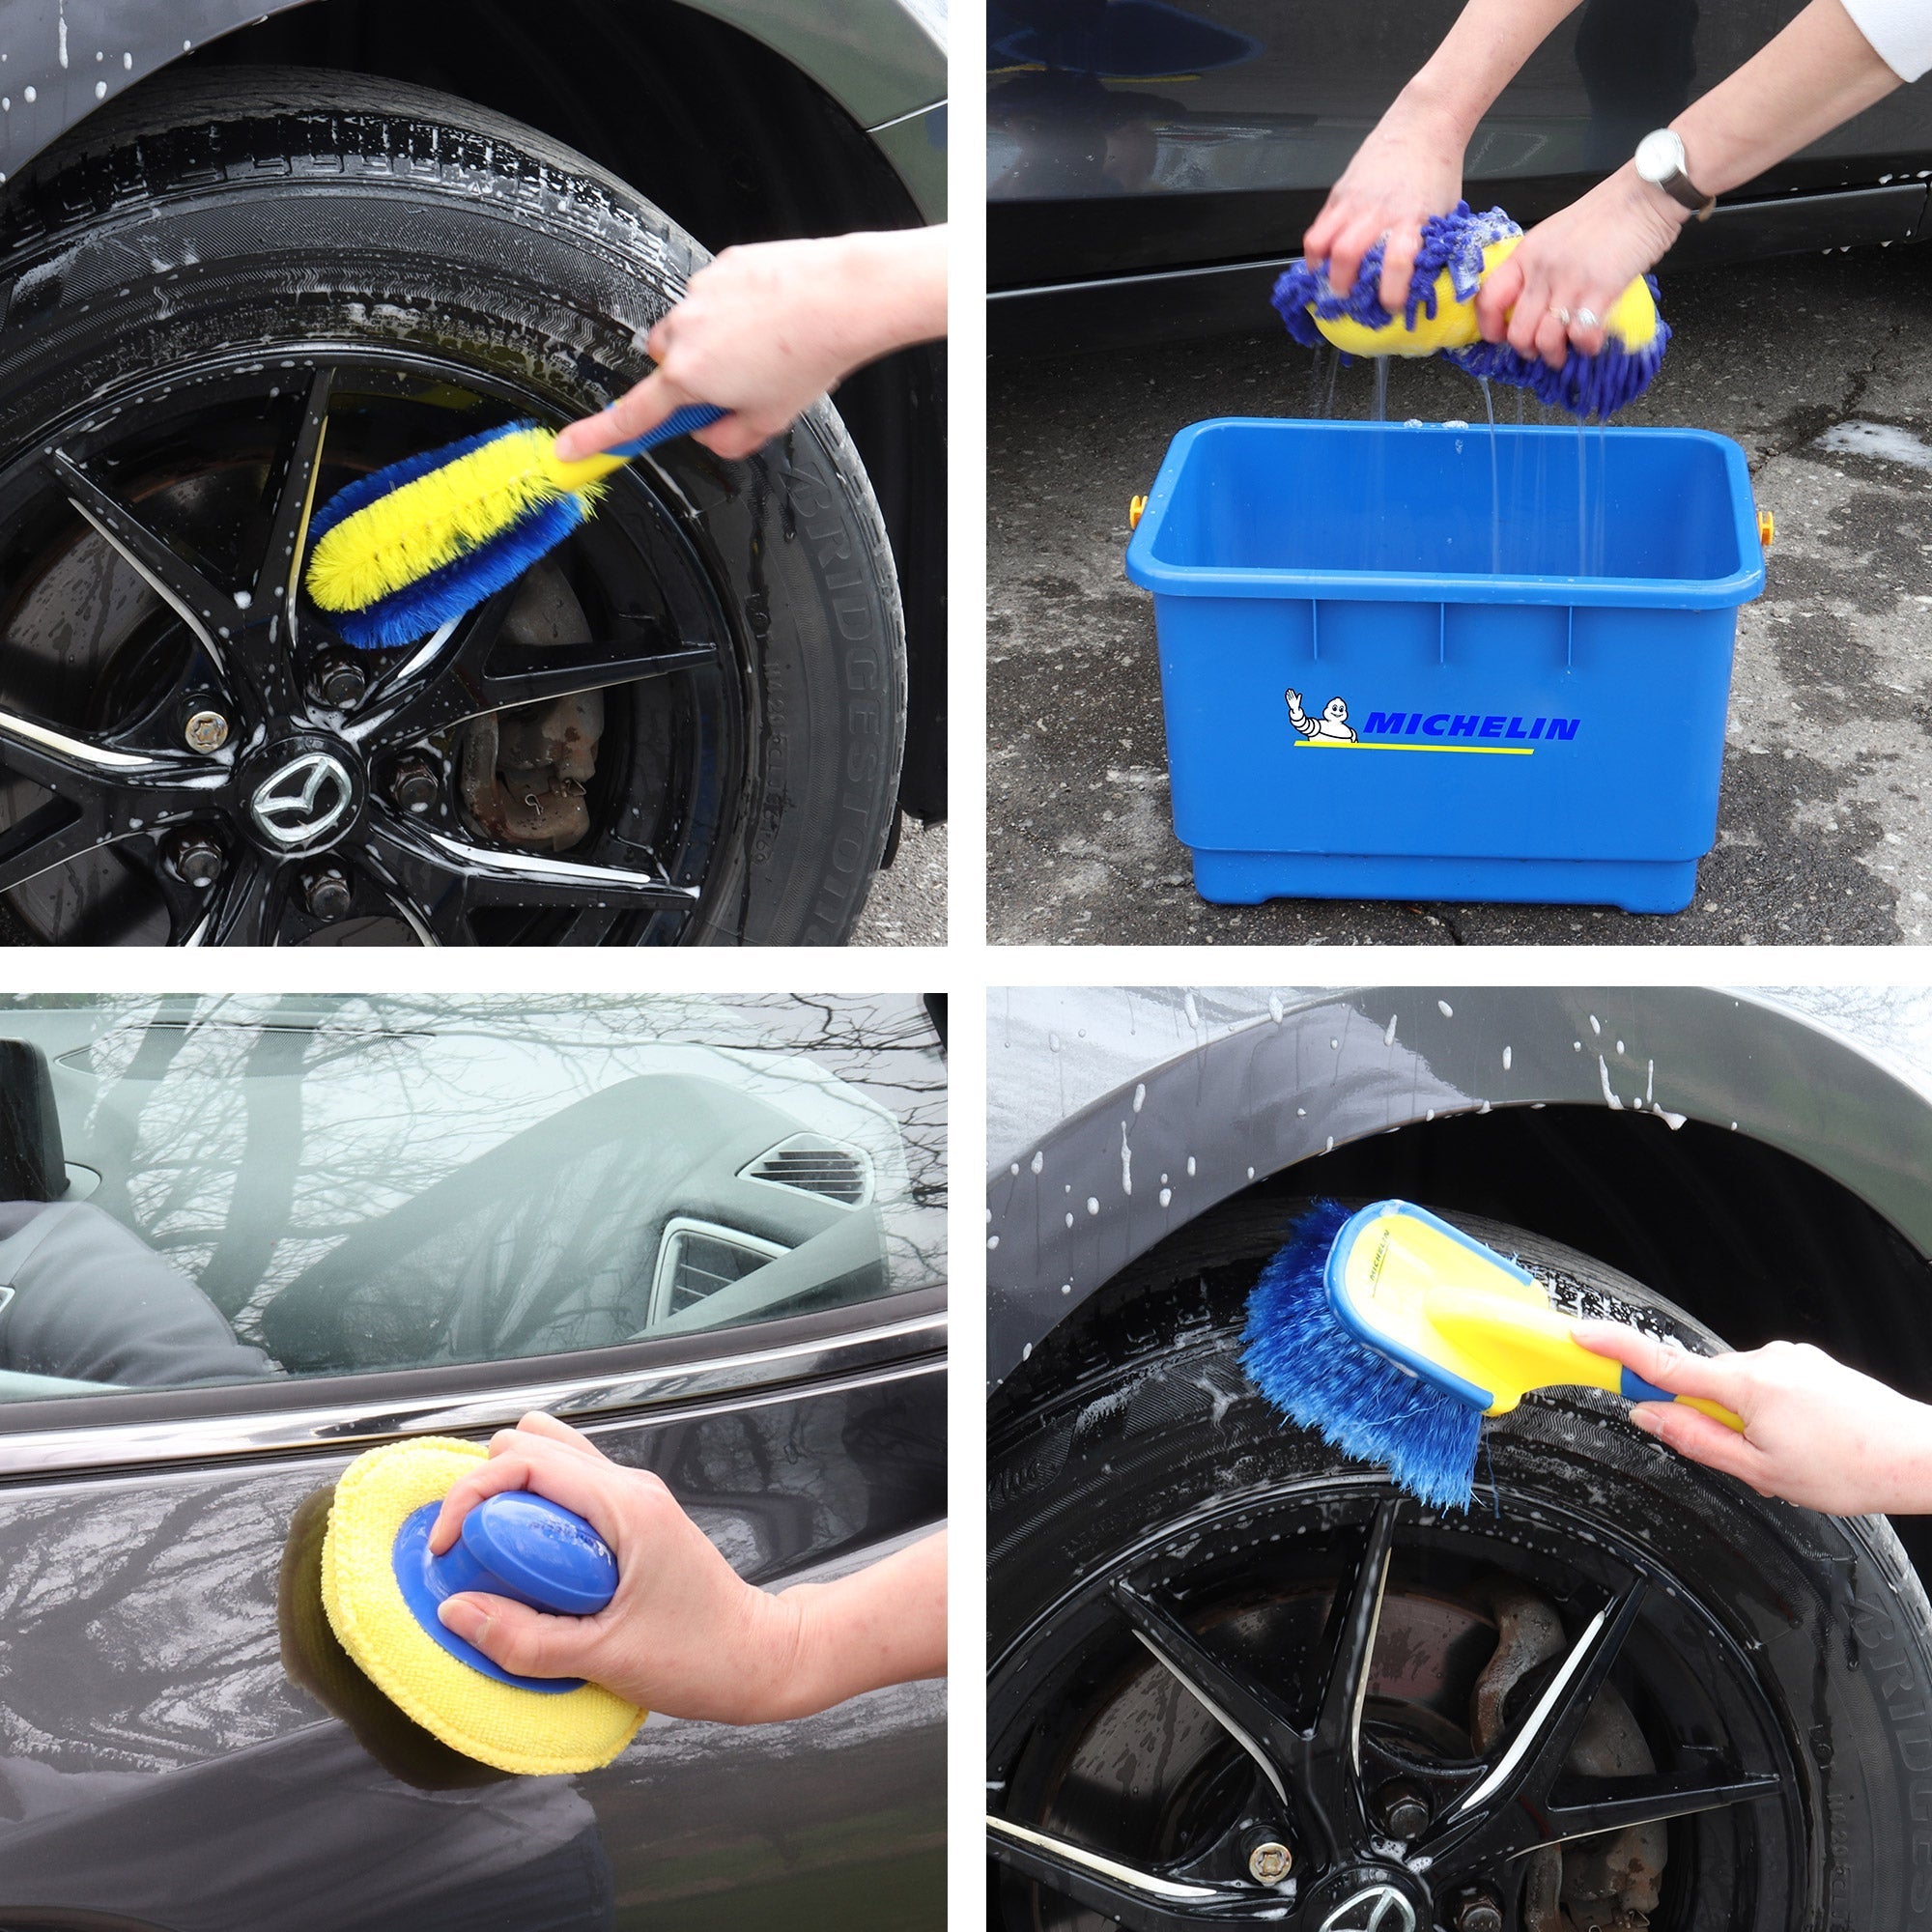 1X Auto Car Wheel Brush Black Plastic Handle Yellow Sponge Tire Rim Cleaner  Tool